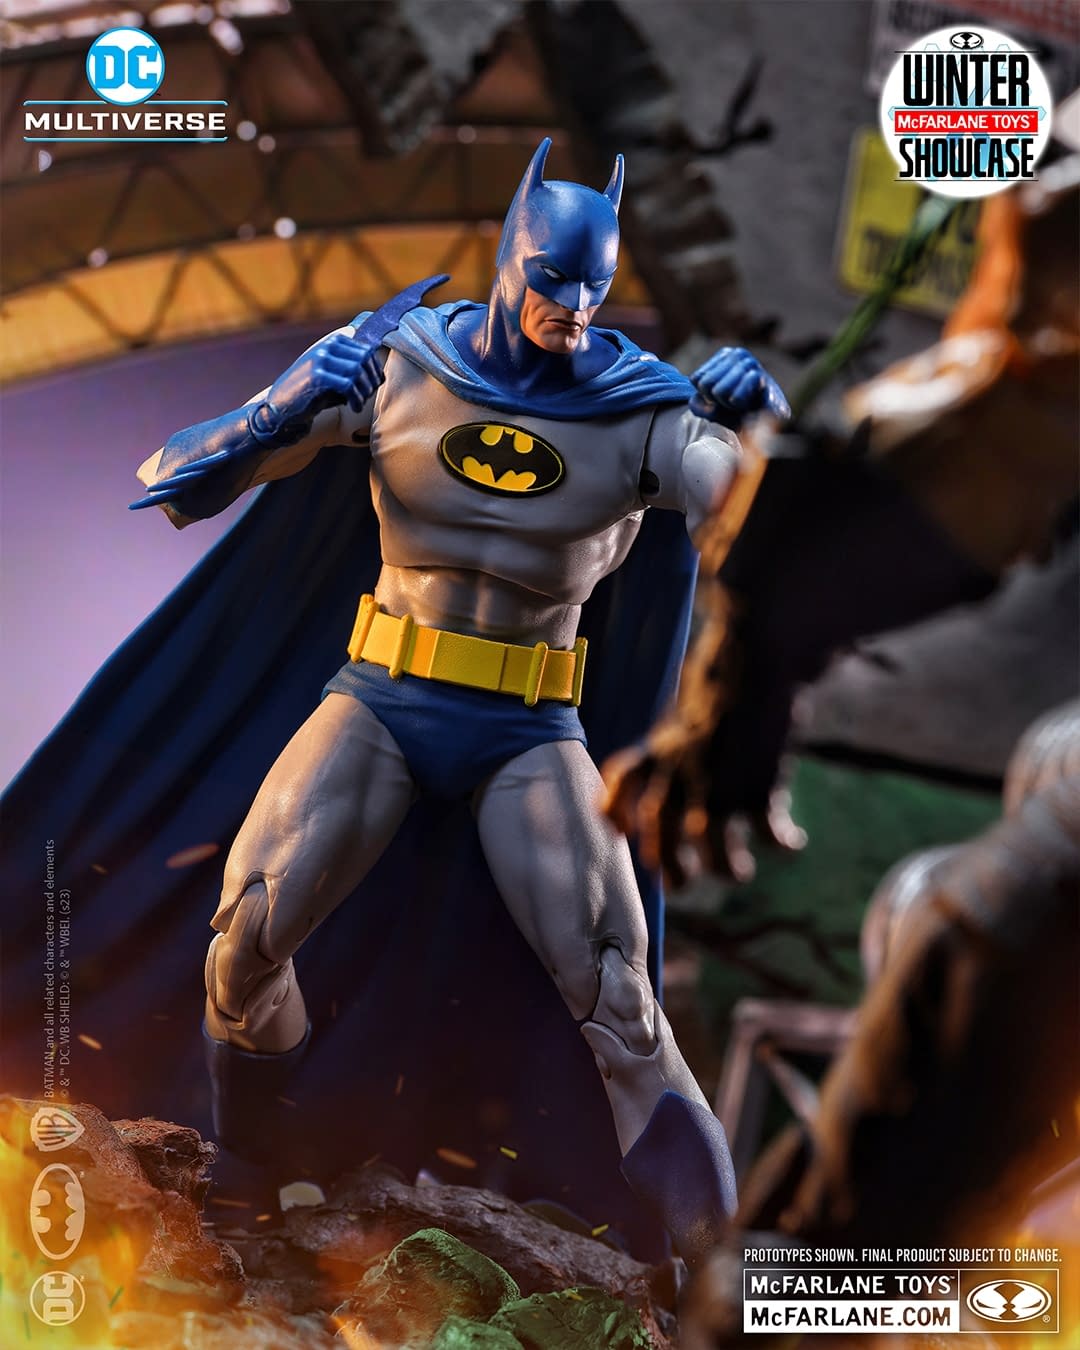 McFarlane Reveals The Flash Batmobile and More DC Comics Figures